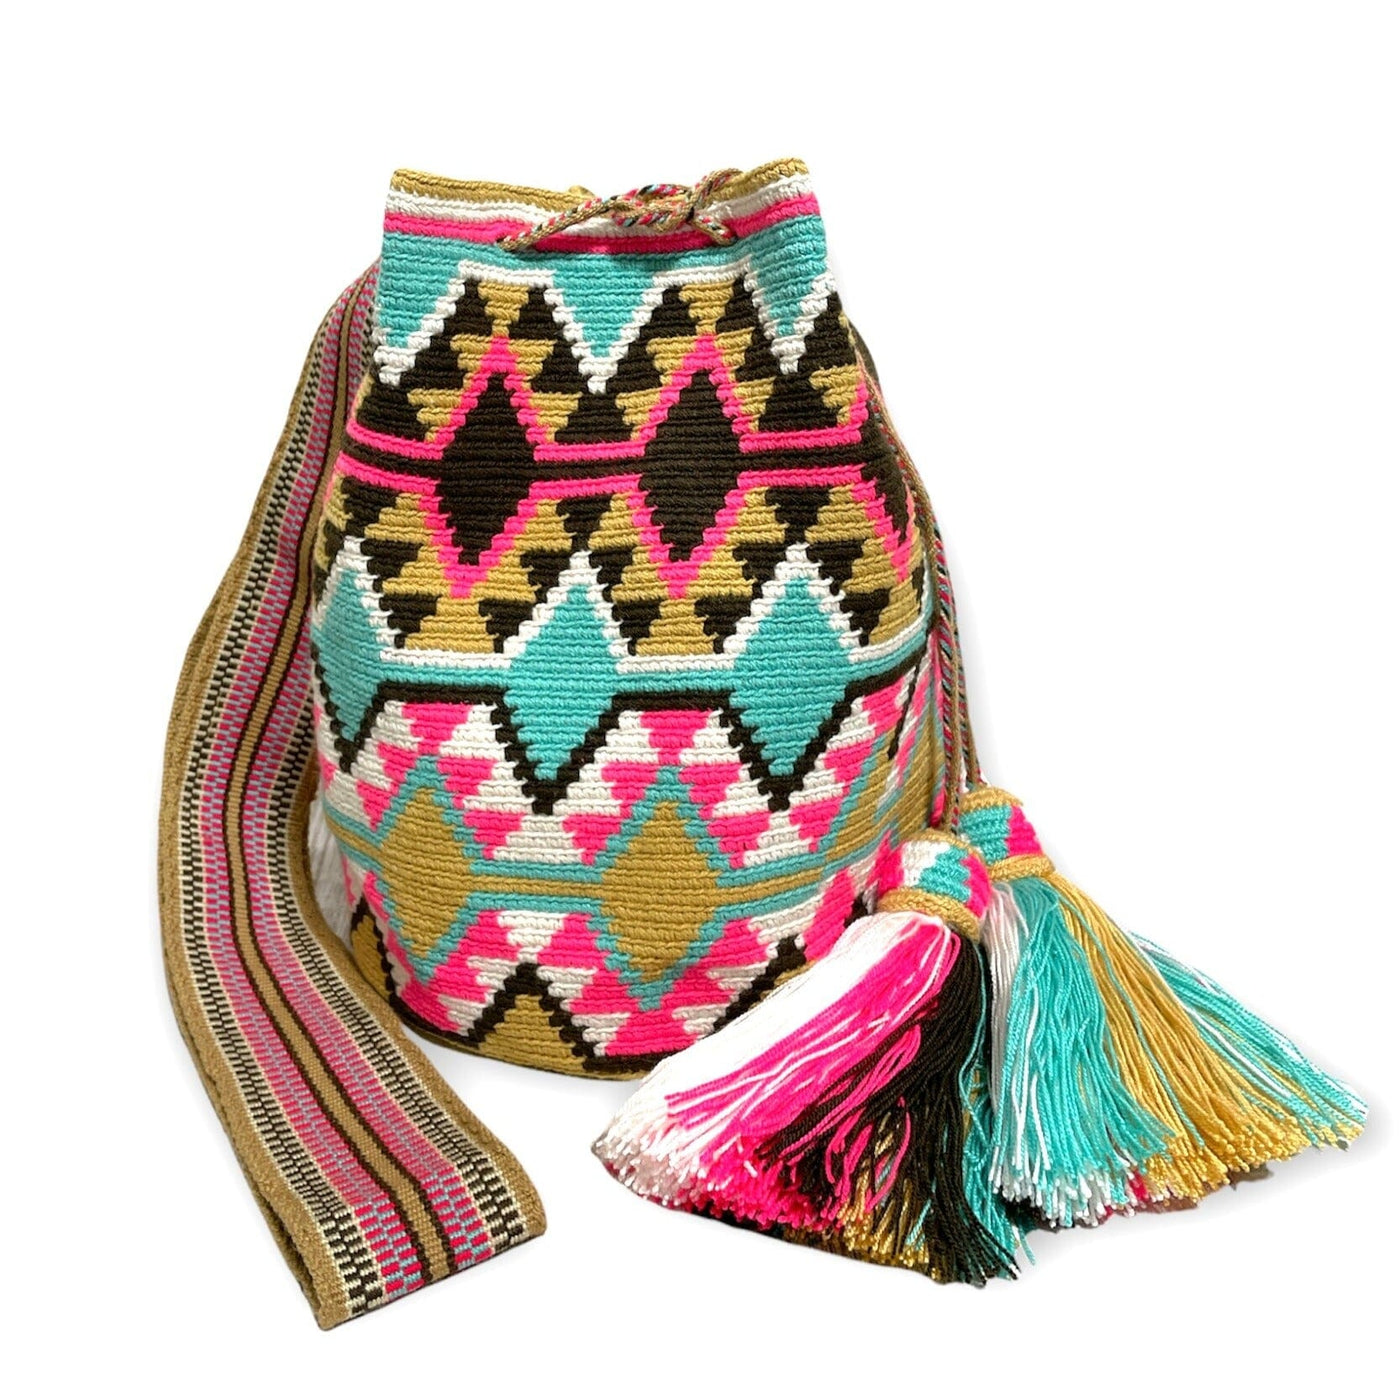 Tribal Pattern| Boho Crossbody Bag for summer | Crochet Bohemian handbag | Colorful 4U